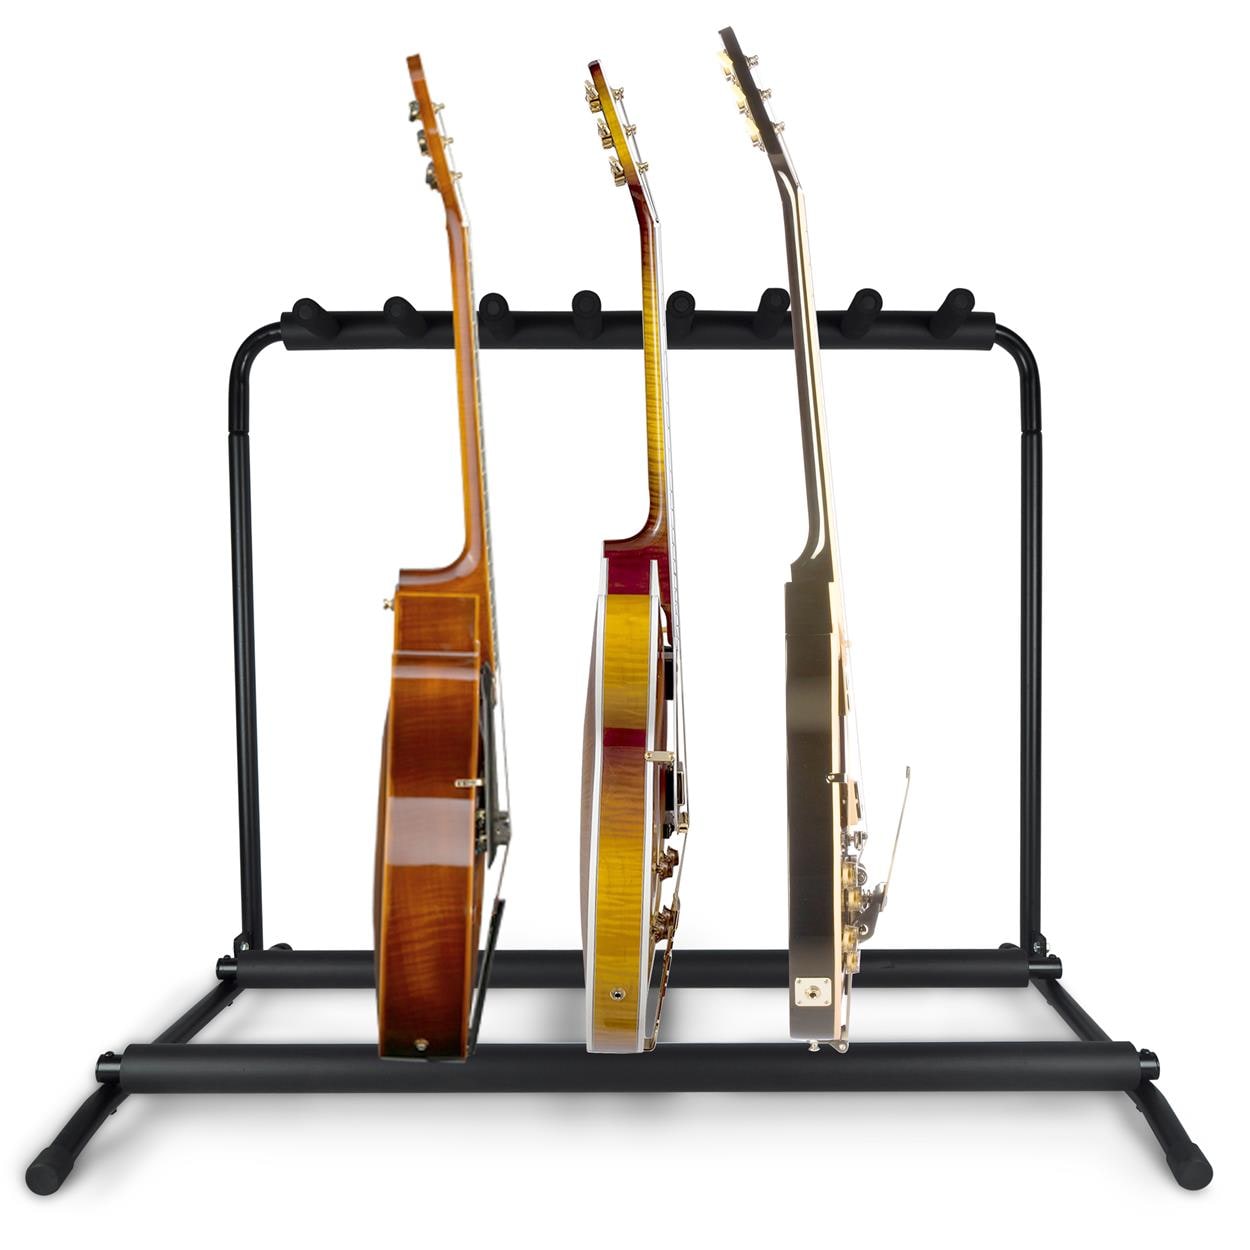 Pyle Guitar Stand, Multi-Instrument Floorstand Guitar Rack Holder